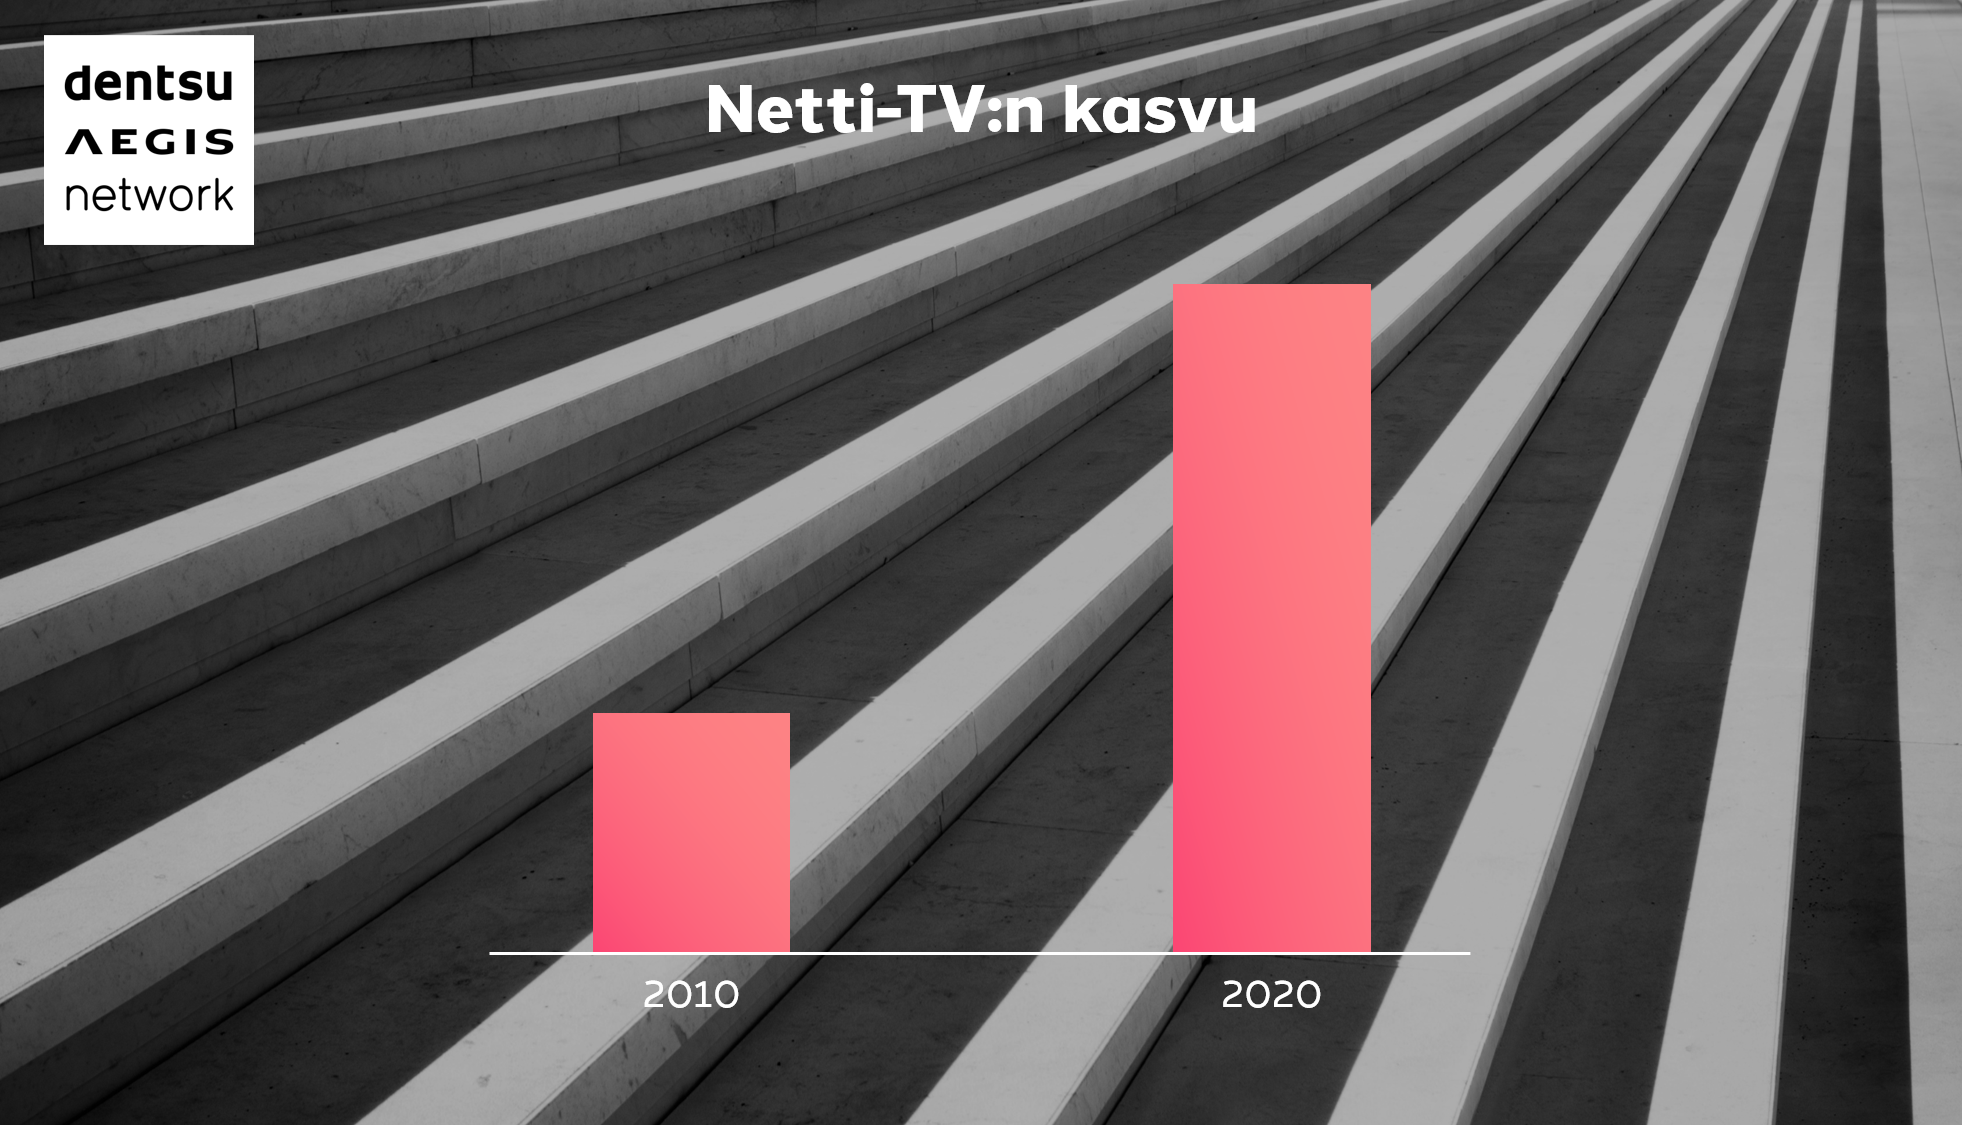 Netti-TV:n kasvu